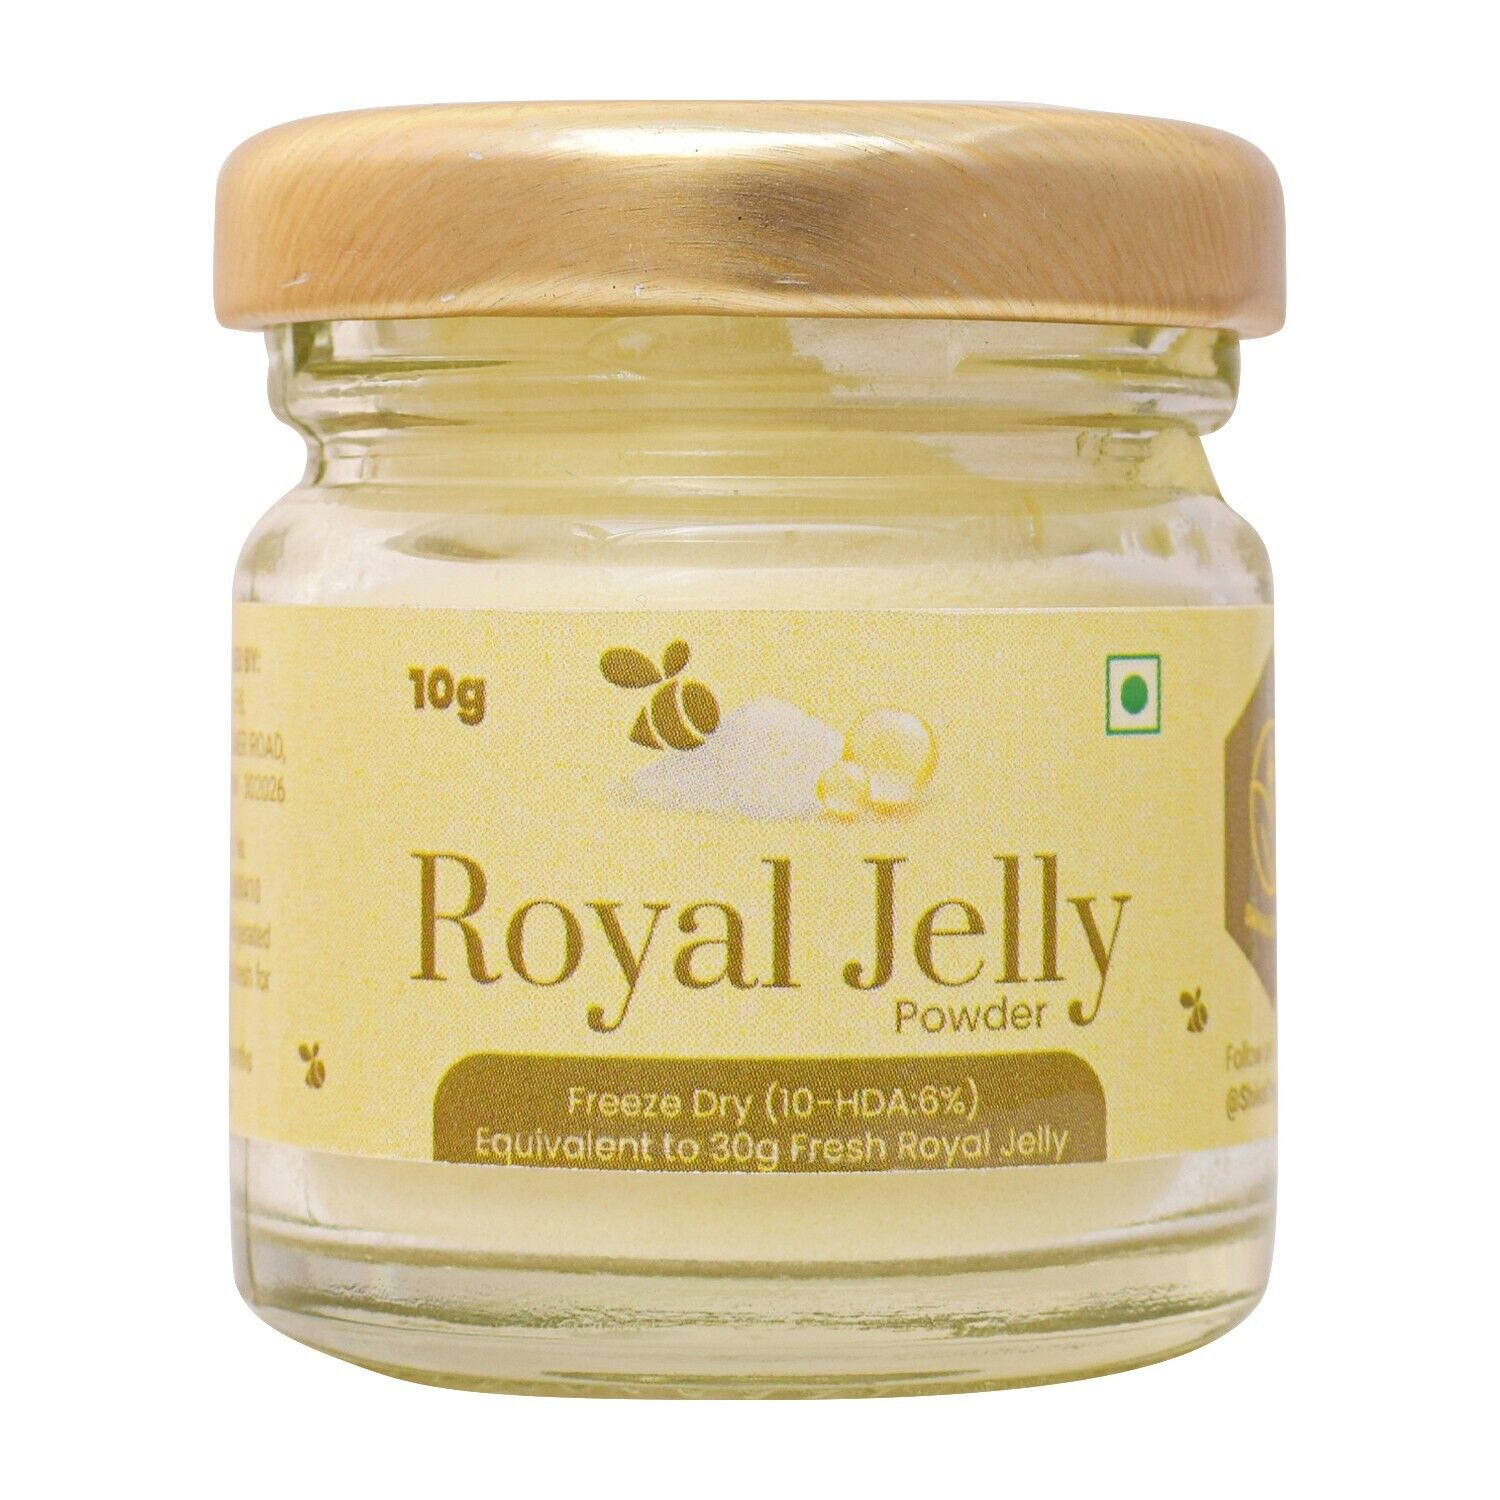 Royal Jelly Powder - Freeze Dry 10-HDA:6% - 1g Per Serving